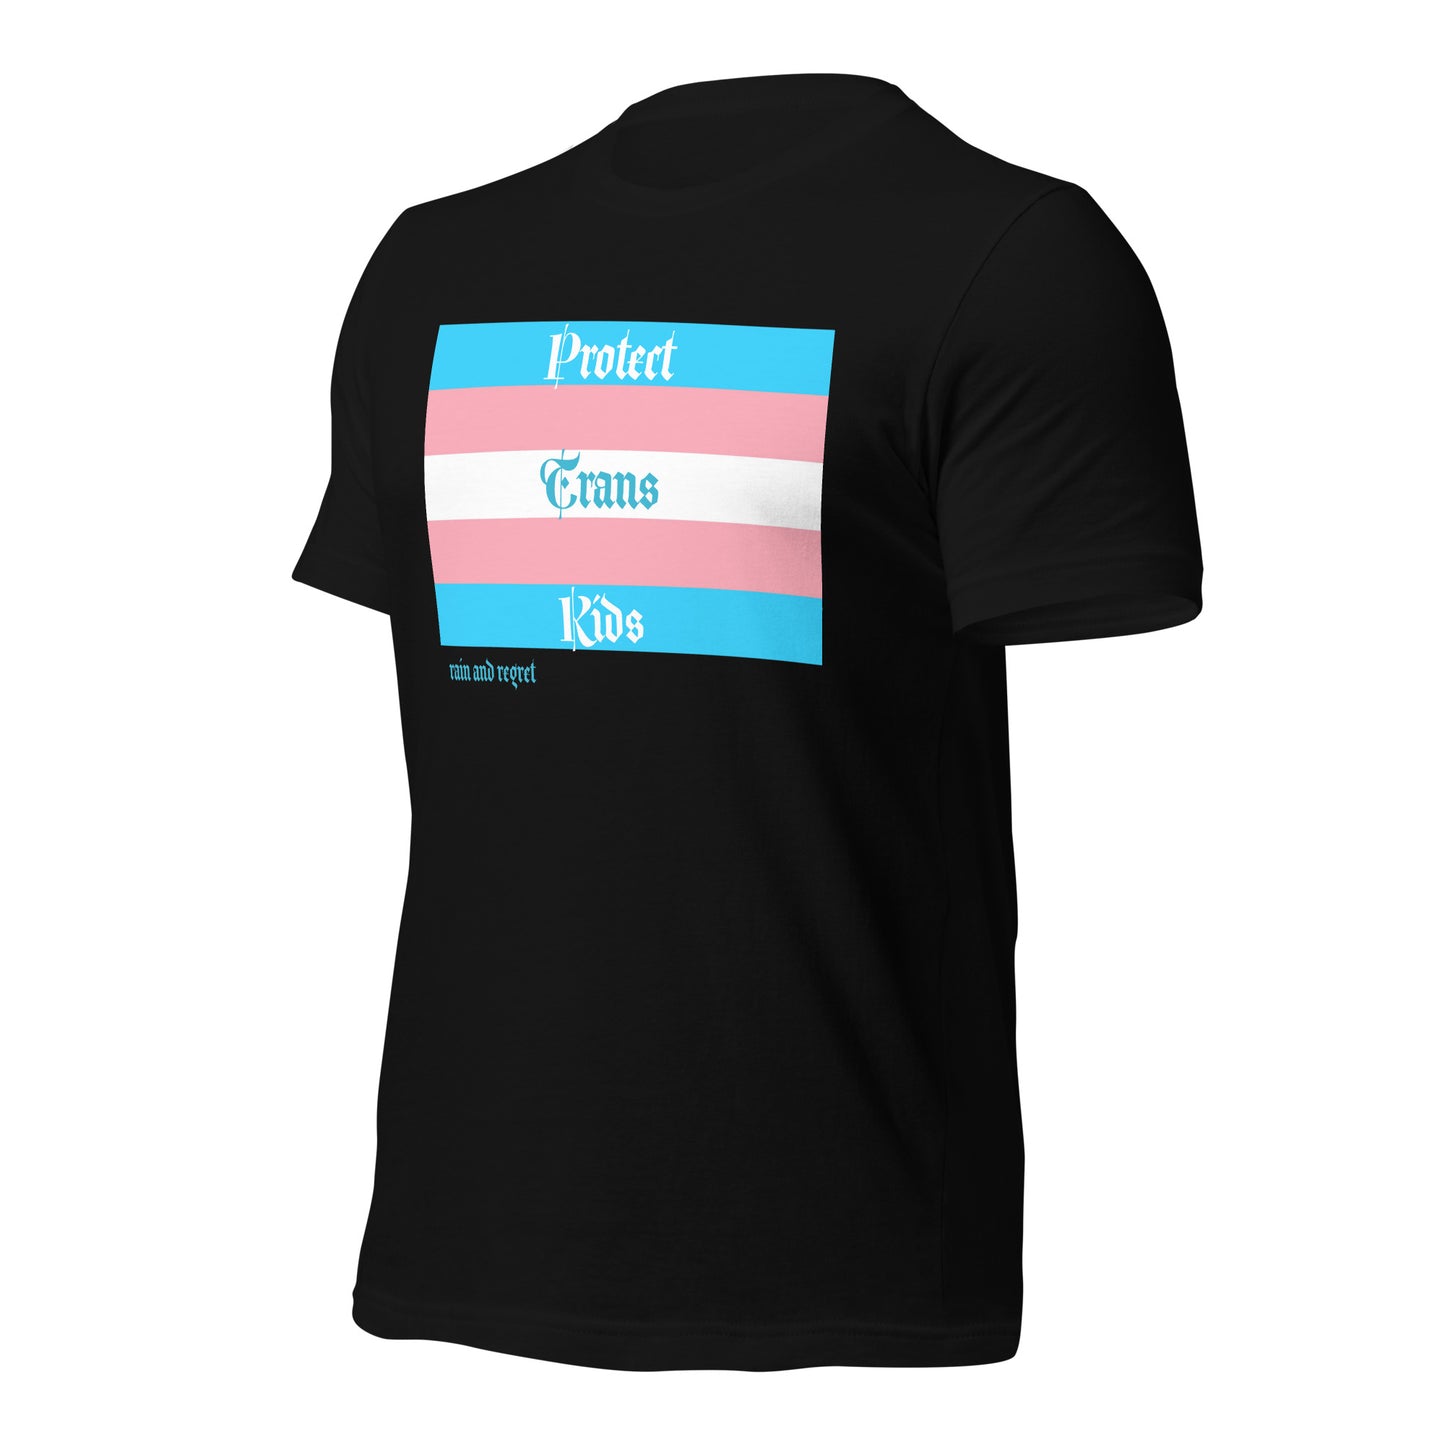 Protect Trans Kids Unisex t-shirt